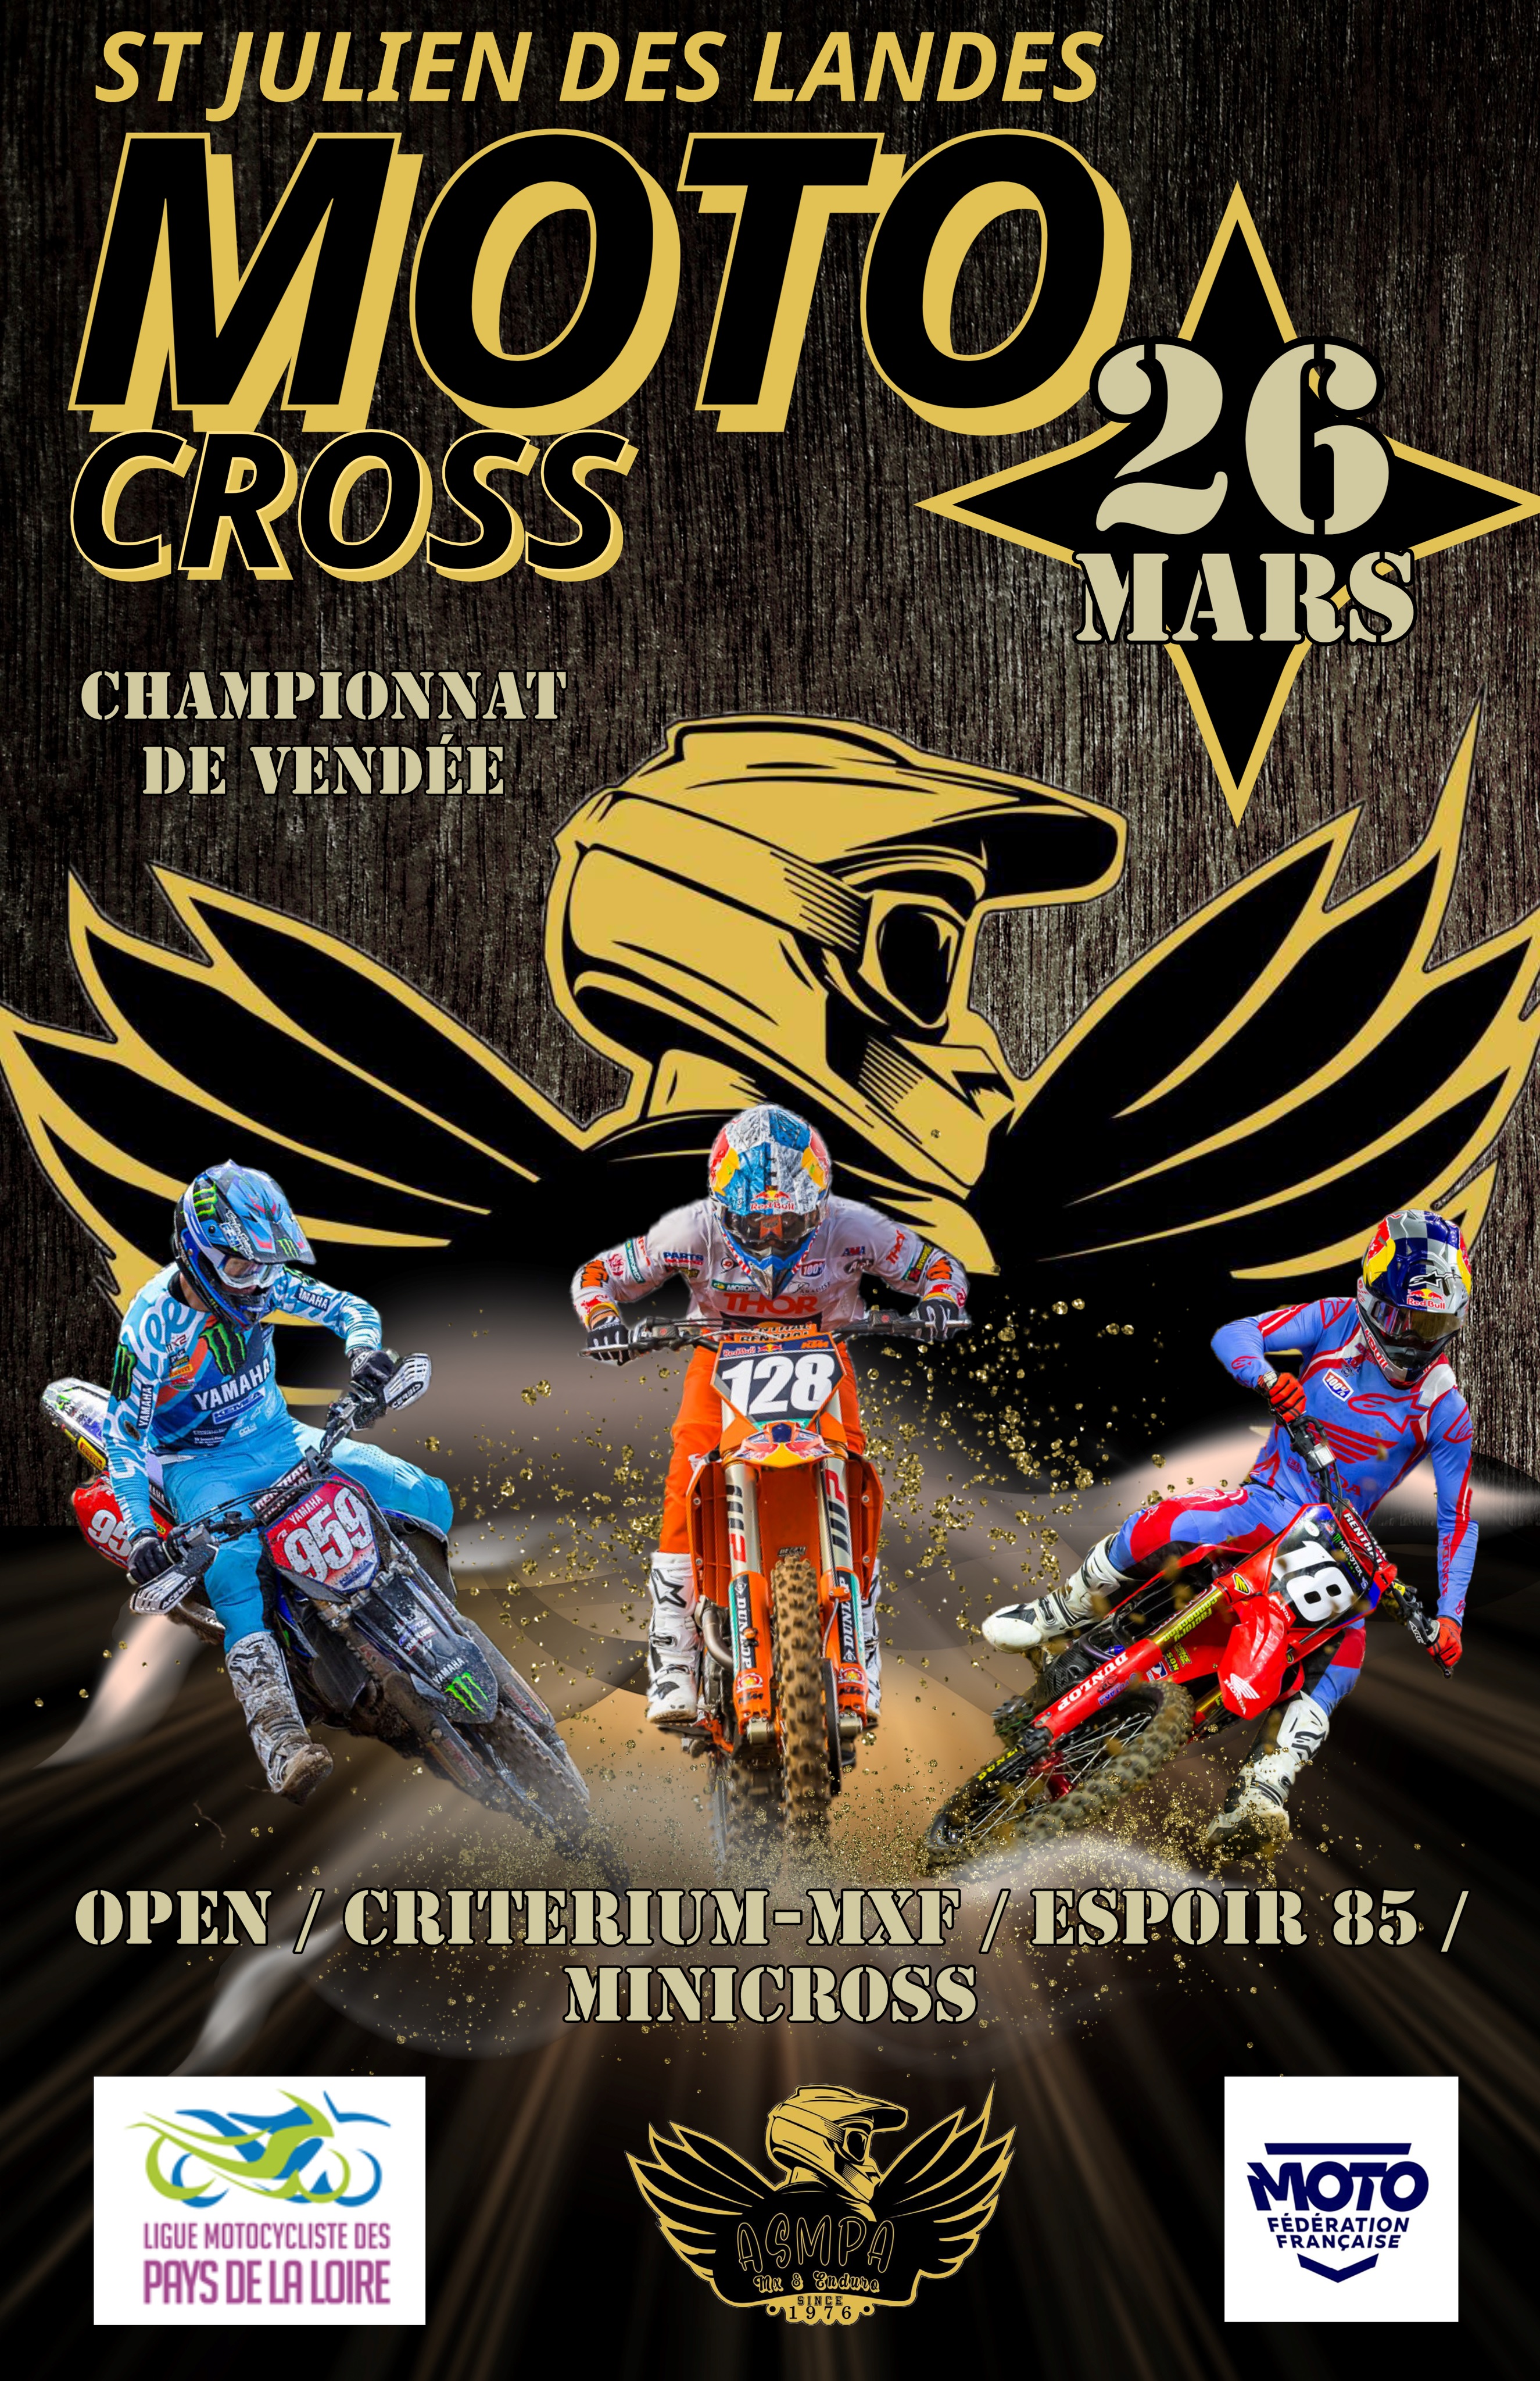 Info Motocross - épreuve St Julien des Landes (85) 26 mars